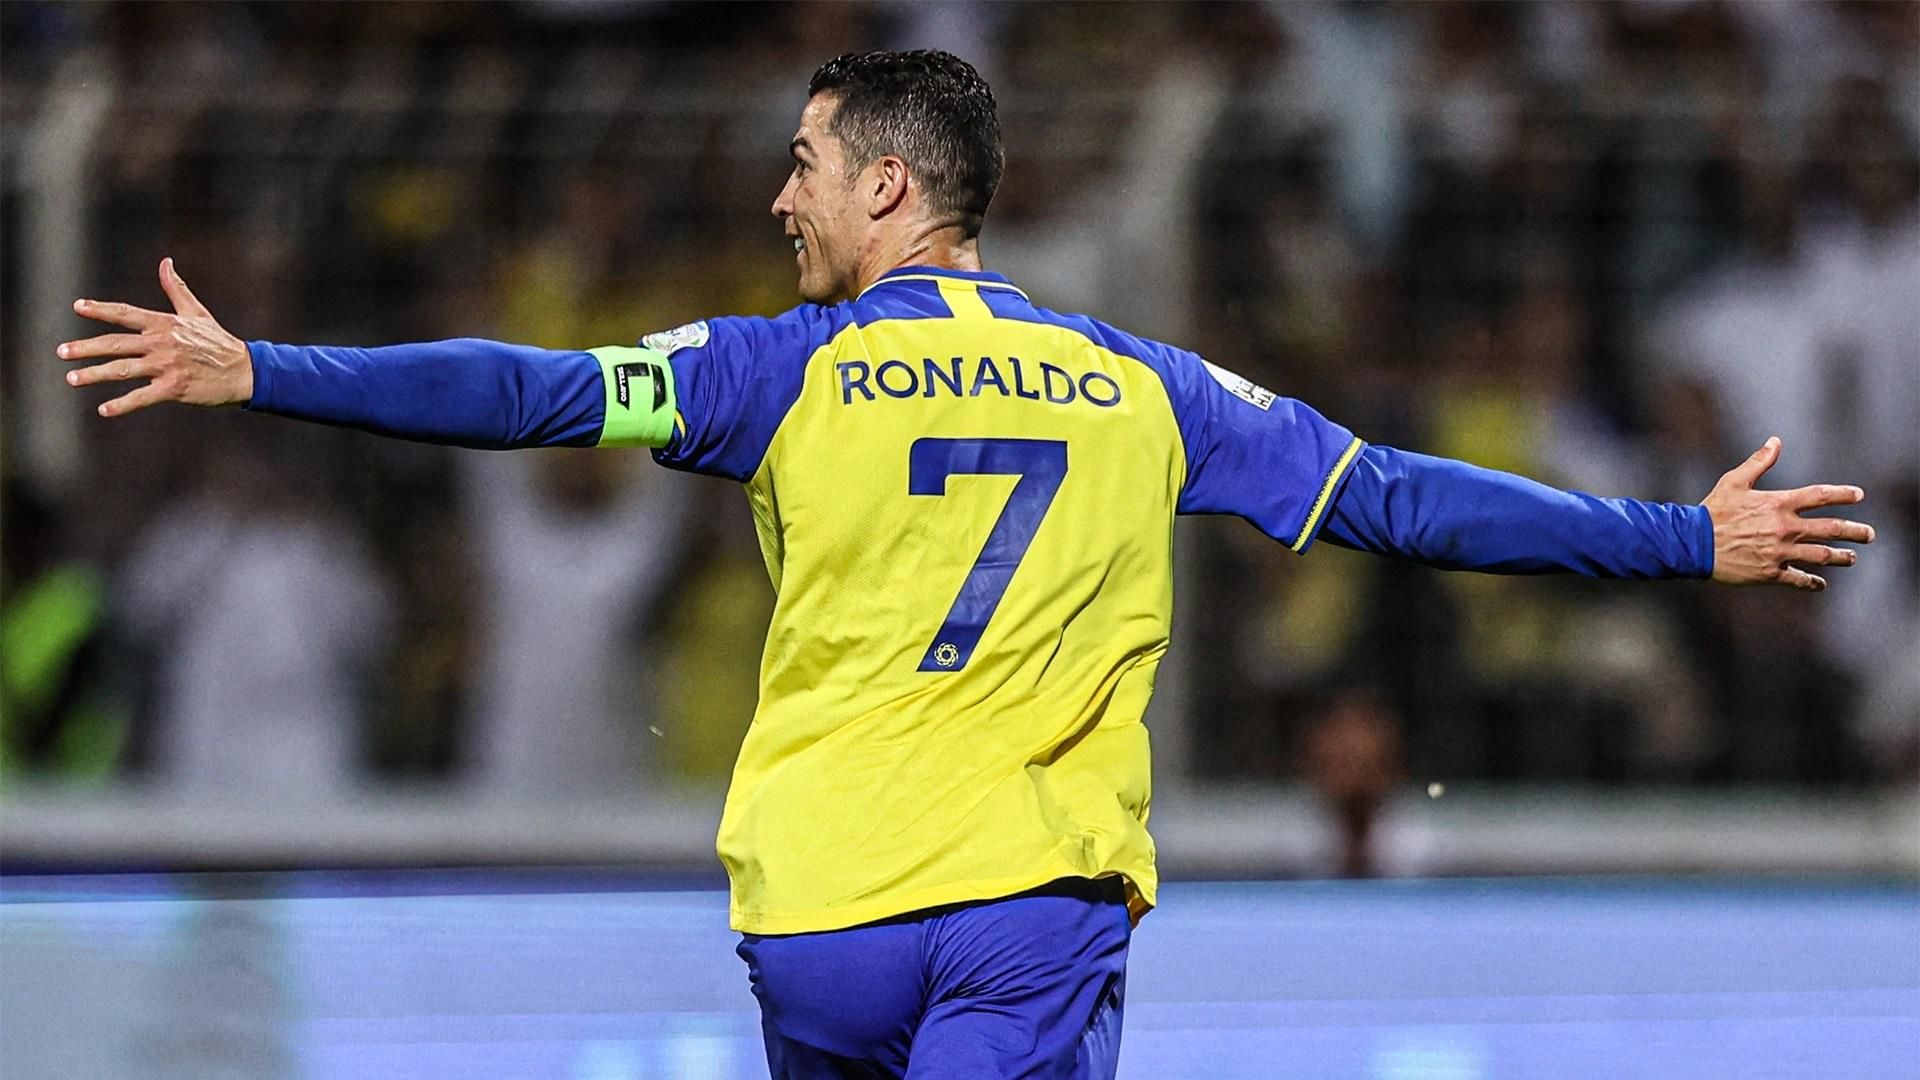 Al Nassr forward Ronaldo named Saudi Arabia's best player in February